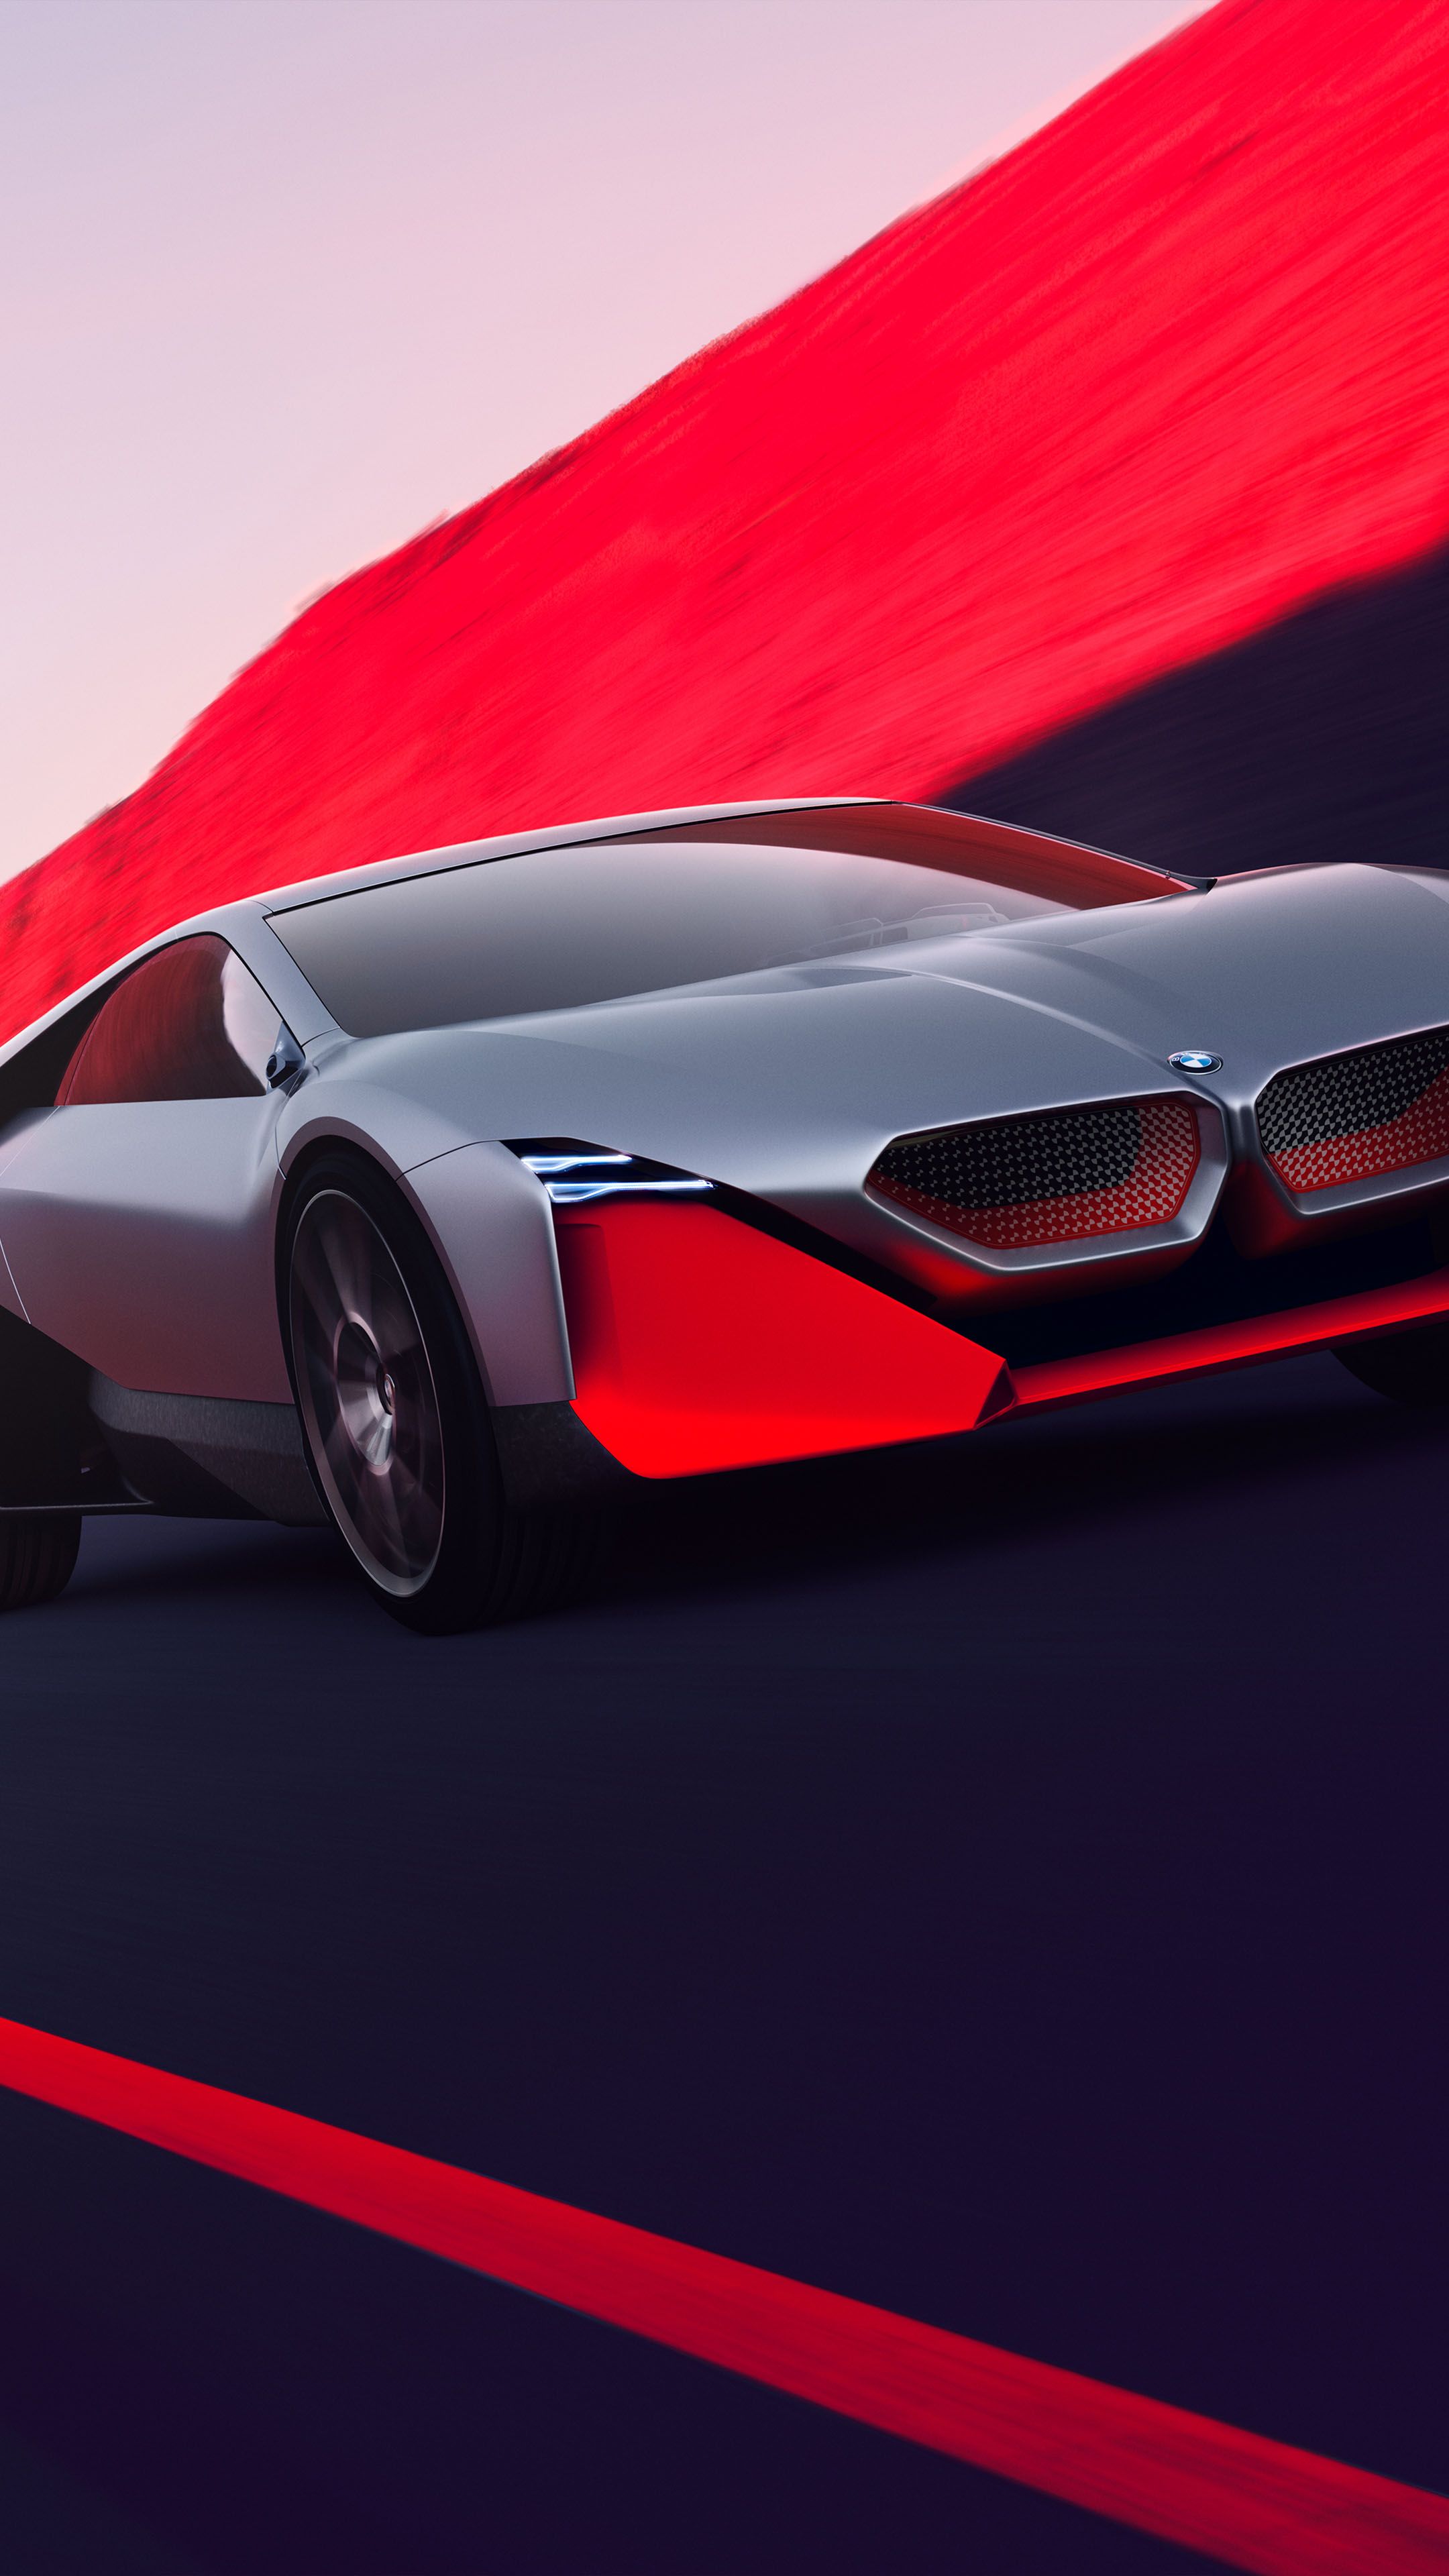 BMW Vision M Next Concept Car 4K Ultra HD Mobile Wallpaper